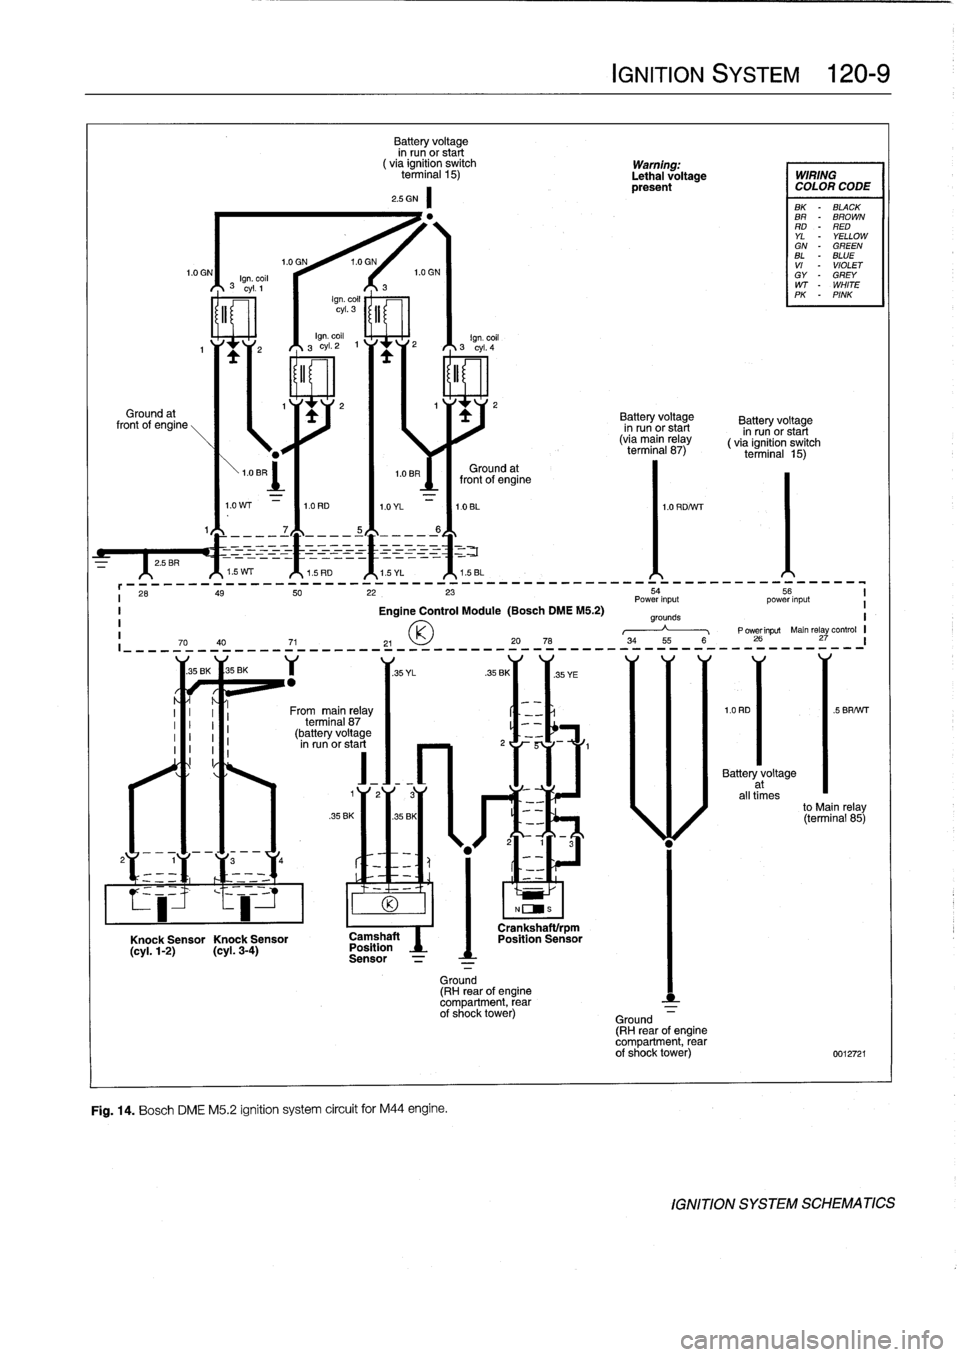 BMW 318i 1998 E36 Workshop Manual 
^1
.5WT
^1
.5RD
^1
.5YL
^1
.5BL
r

	

--__

	

____-

	

__-_

	

___-_

	

-___-_____--__--

	

-____-___

	

____-
i
26
g
5022
23

	

54

	

5

I

	

Power
input

	

power
input
I

	

Engine
Contro